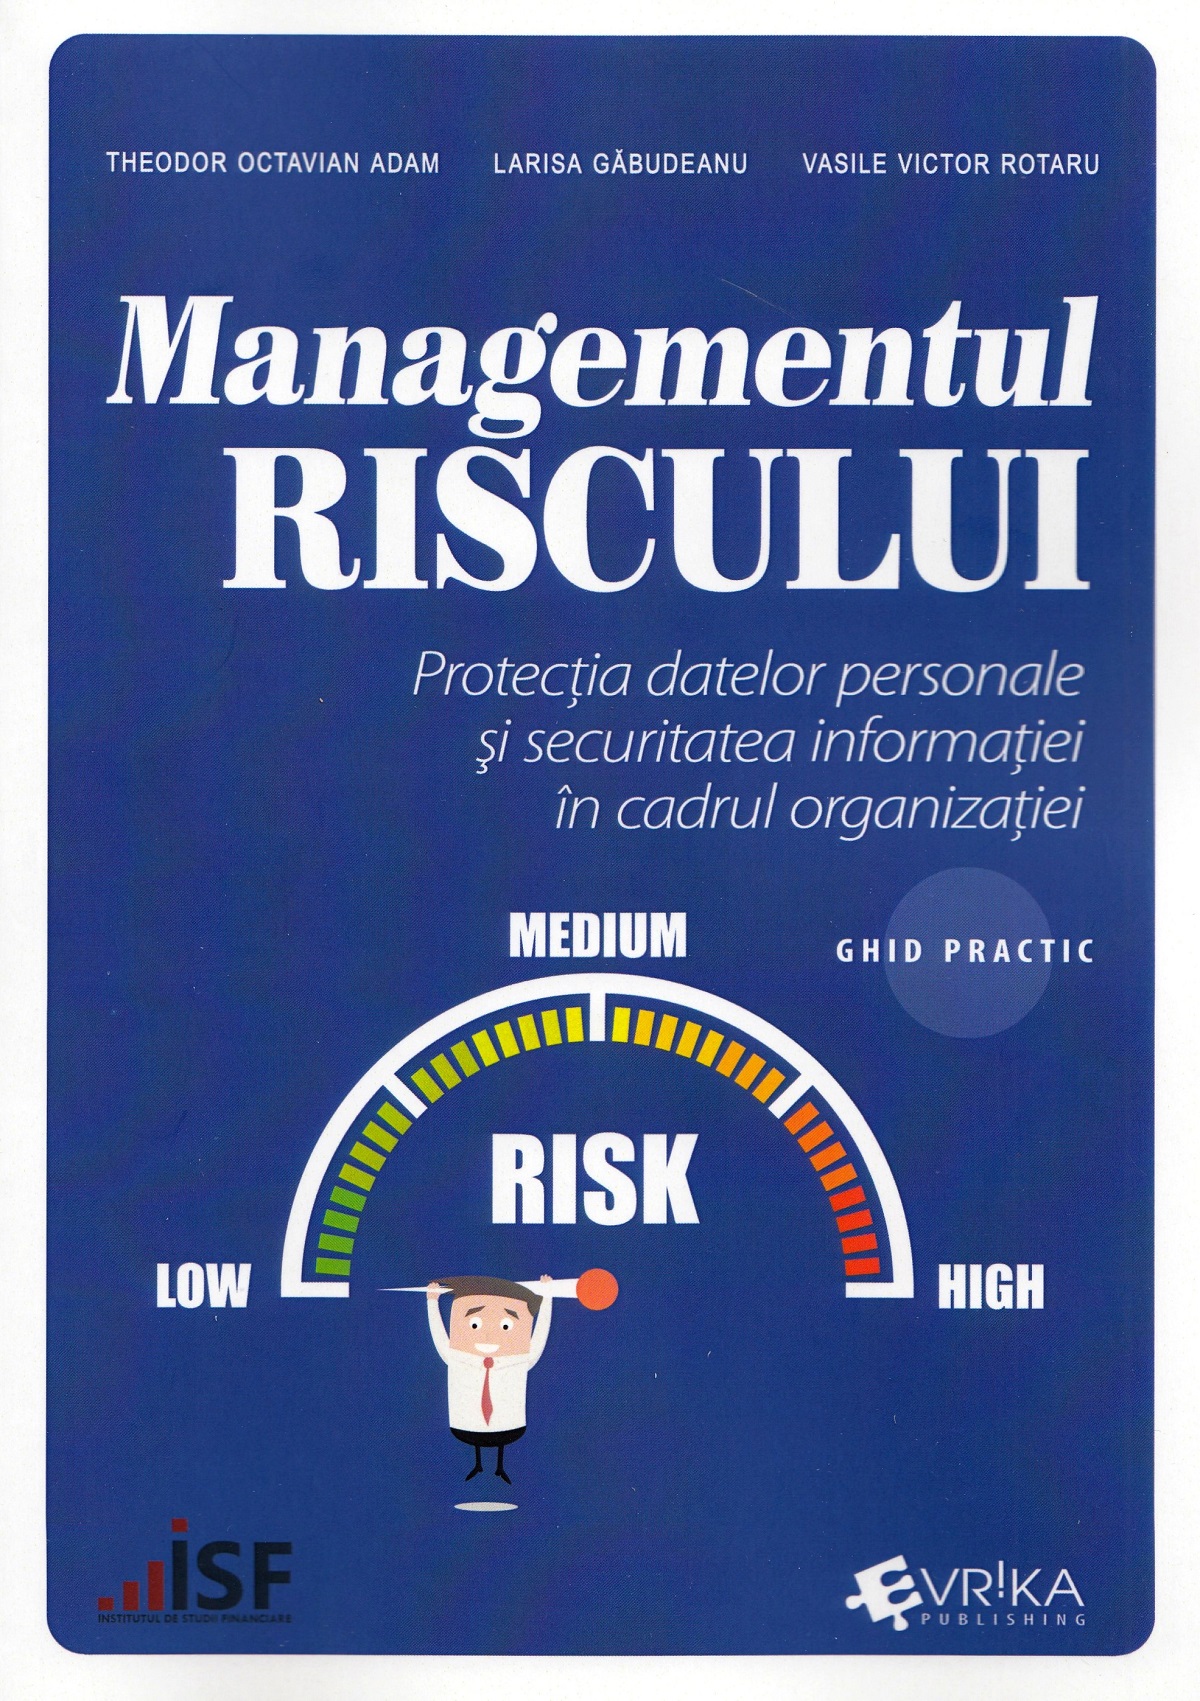 Managementul riscului - Theodor Octavian Adam, Larisa Gabudeanu